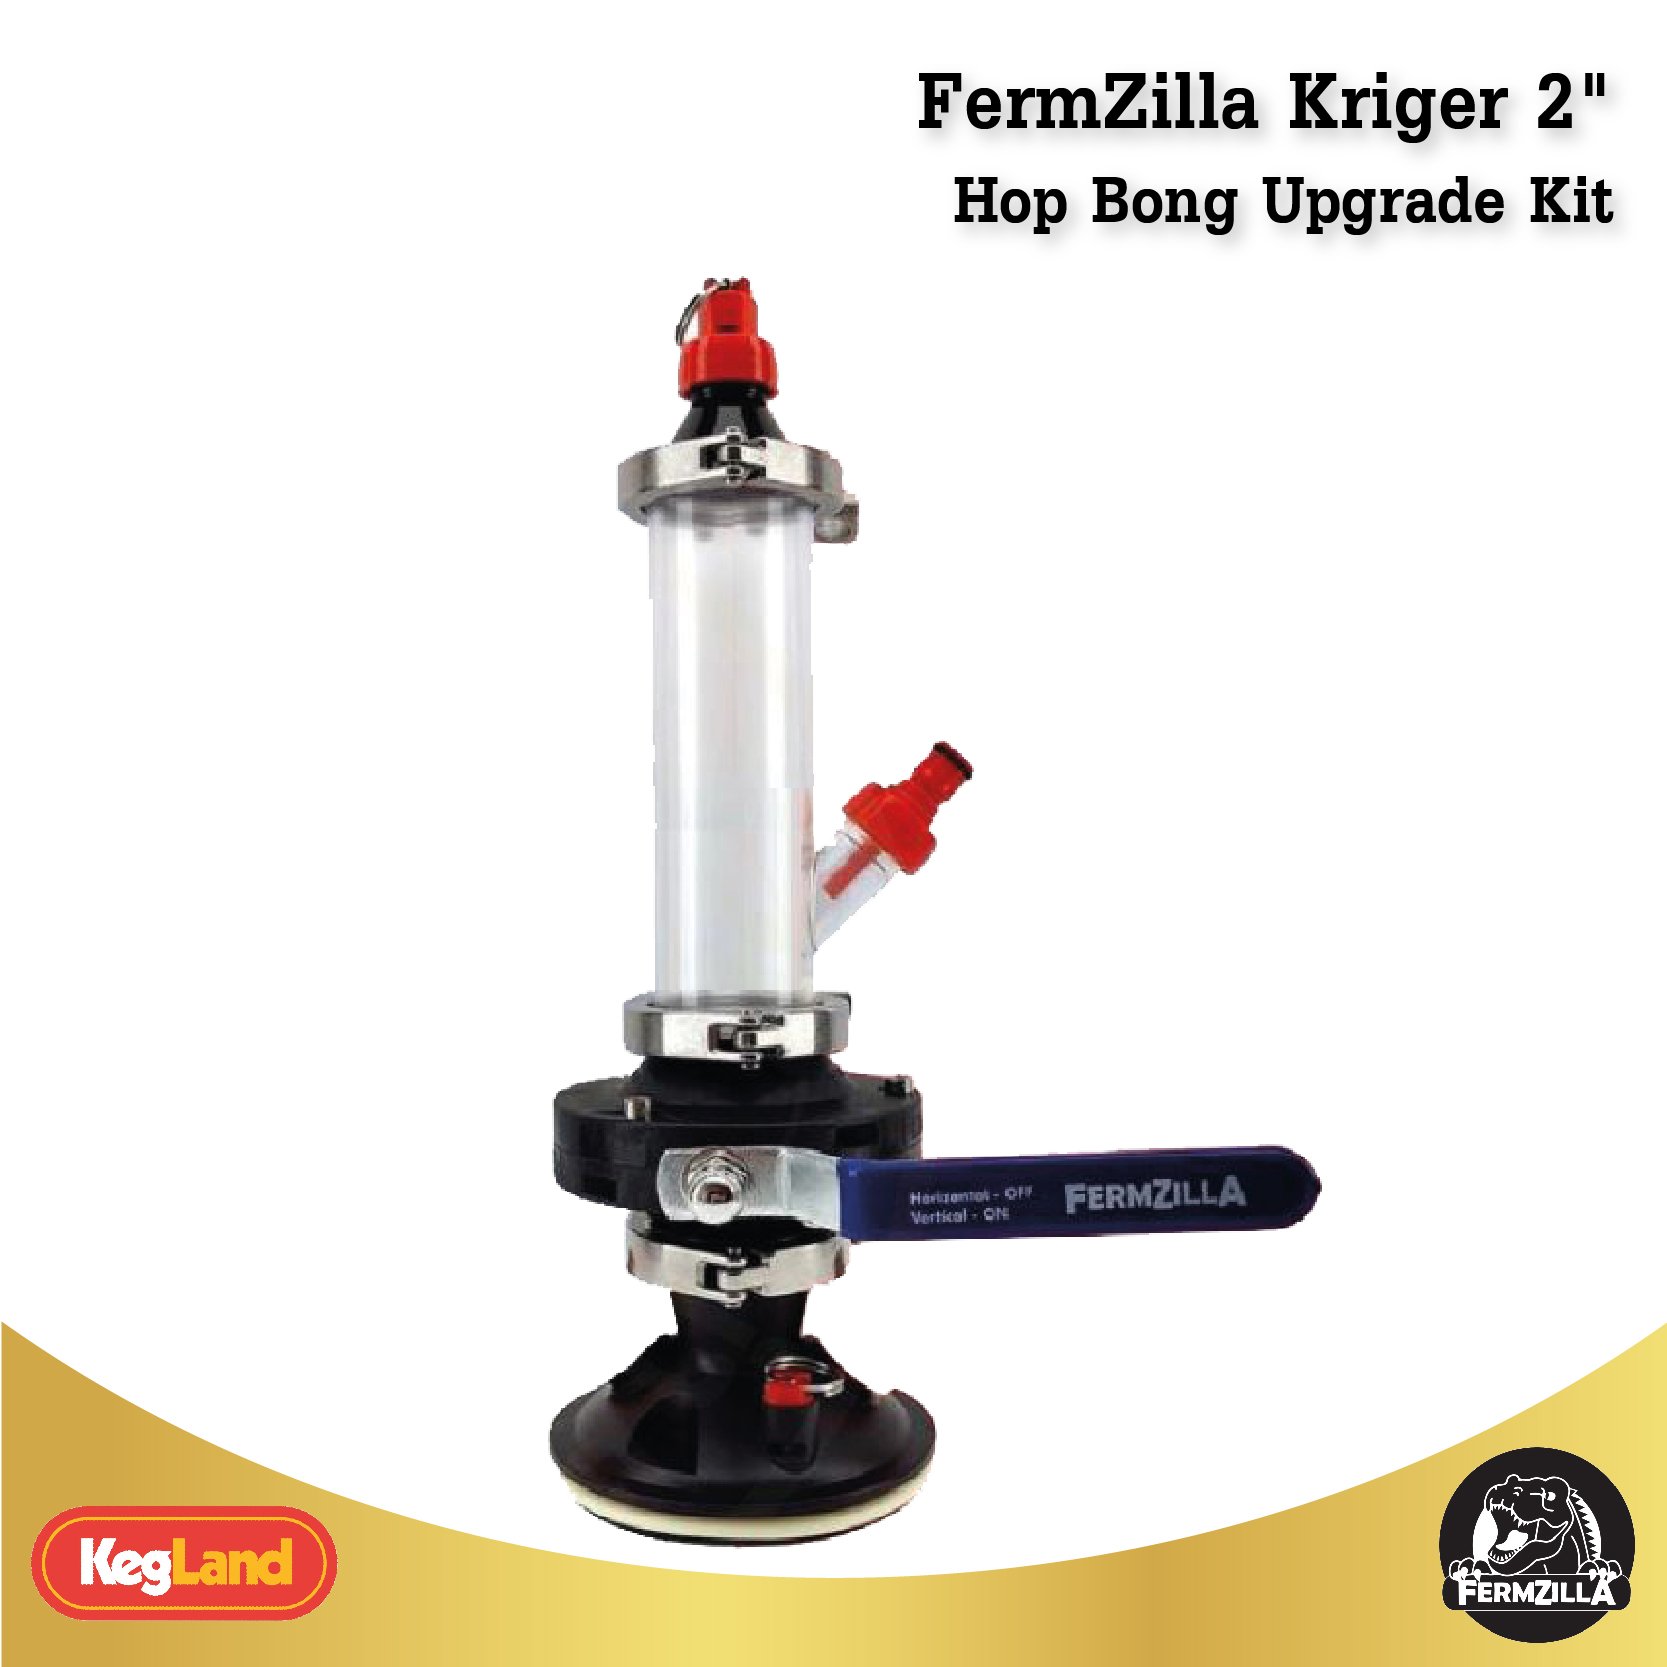 FermZilla Kriger 2" Hop Bong Upgrade Kit for FermZilla Users